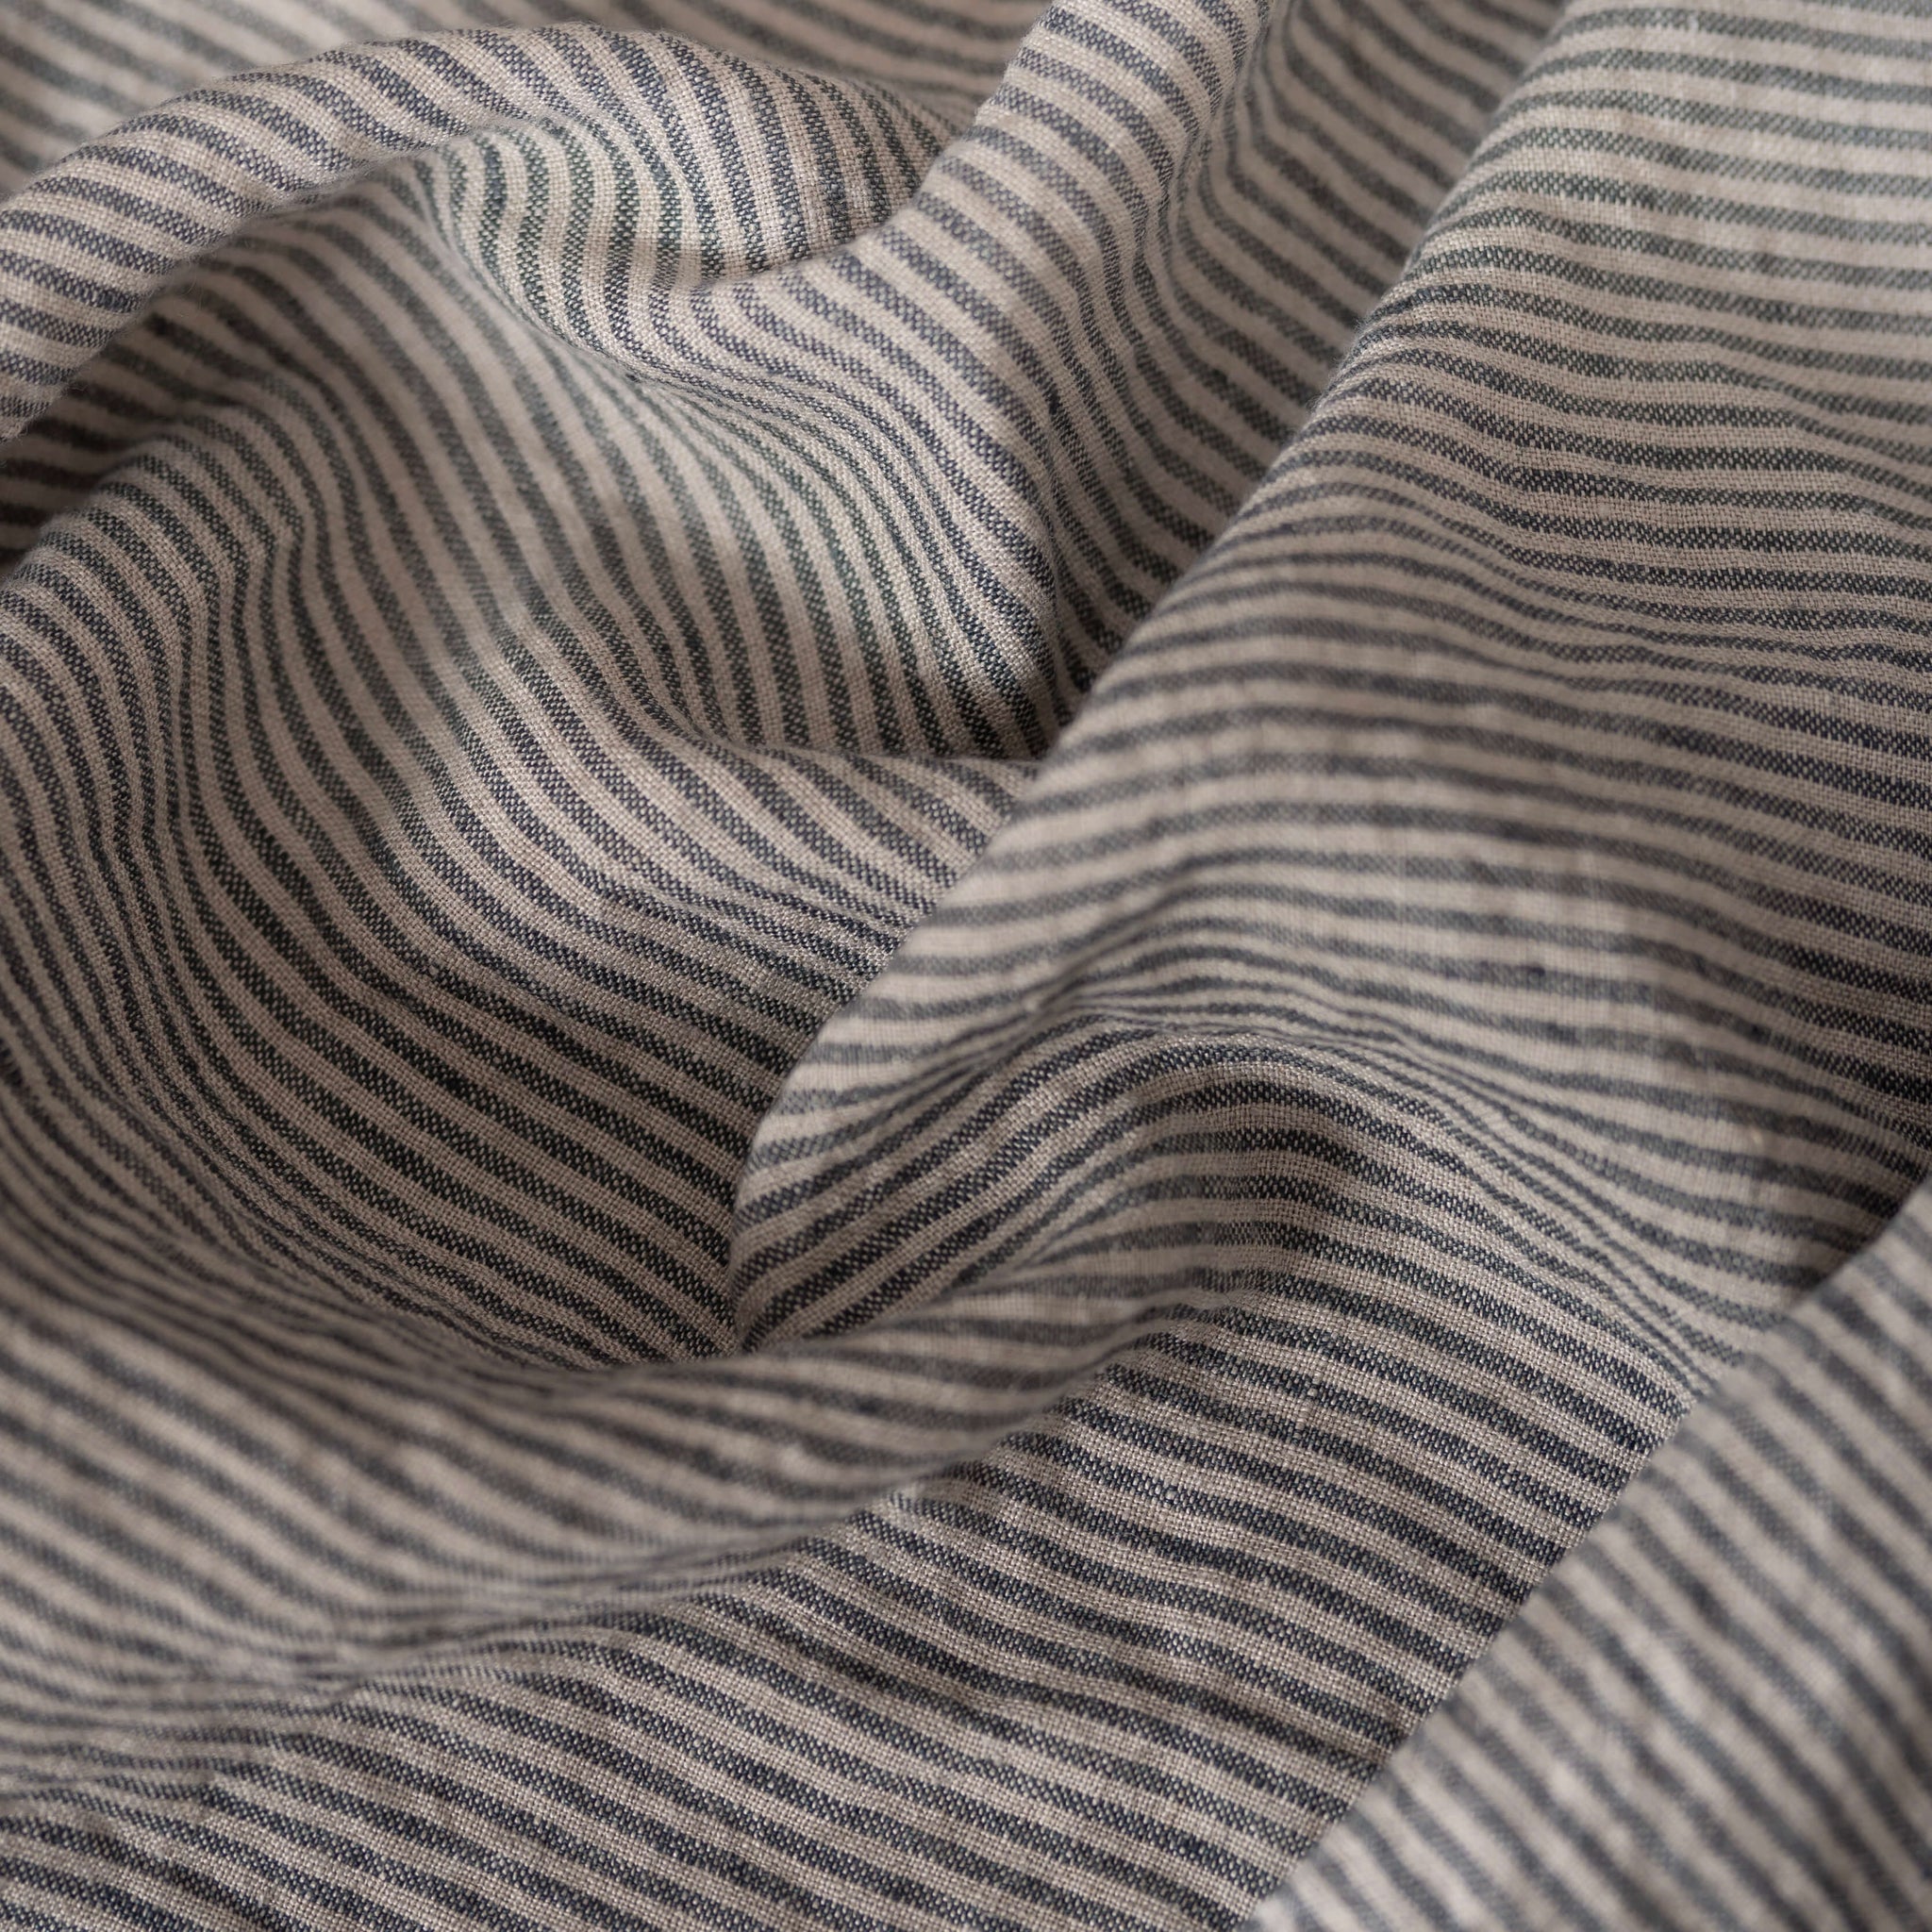 Striped Linen Fabric